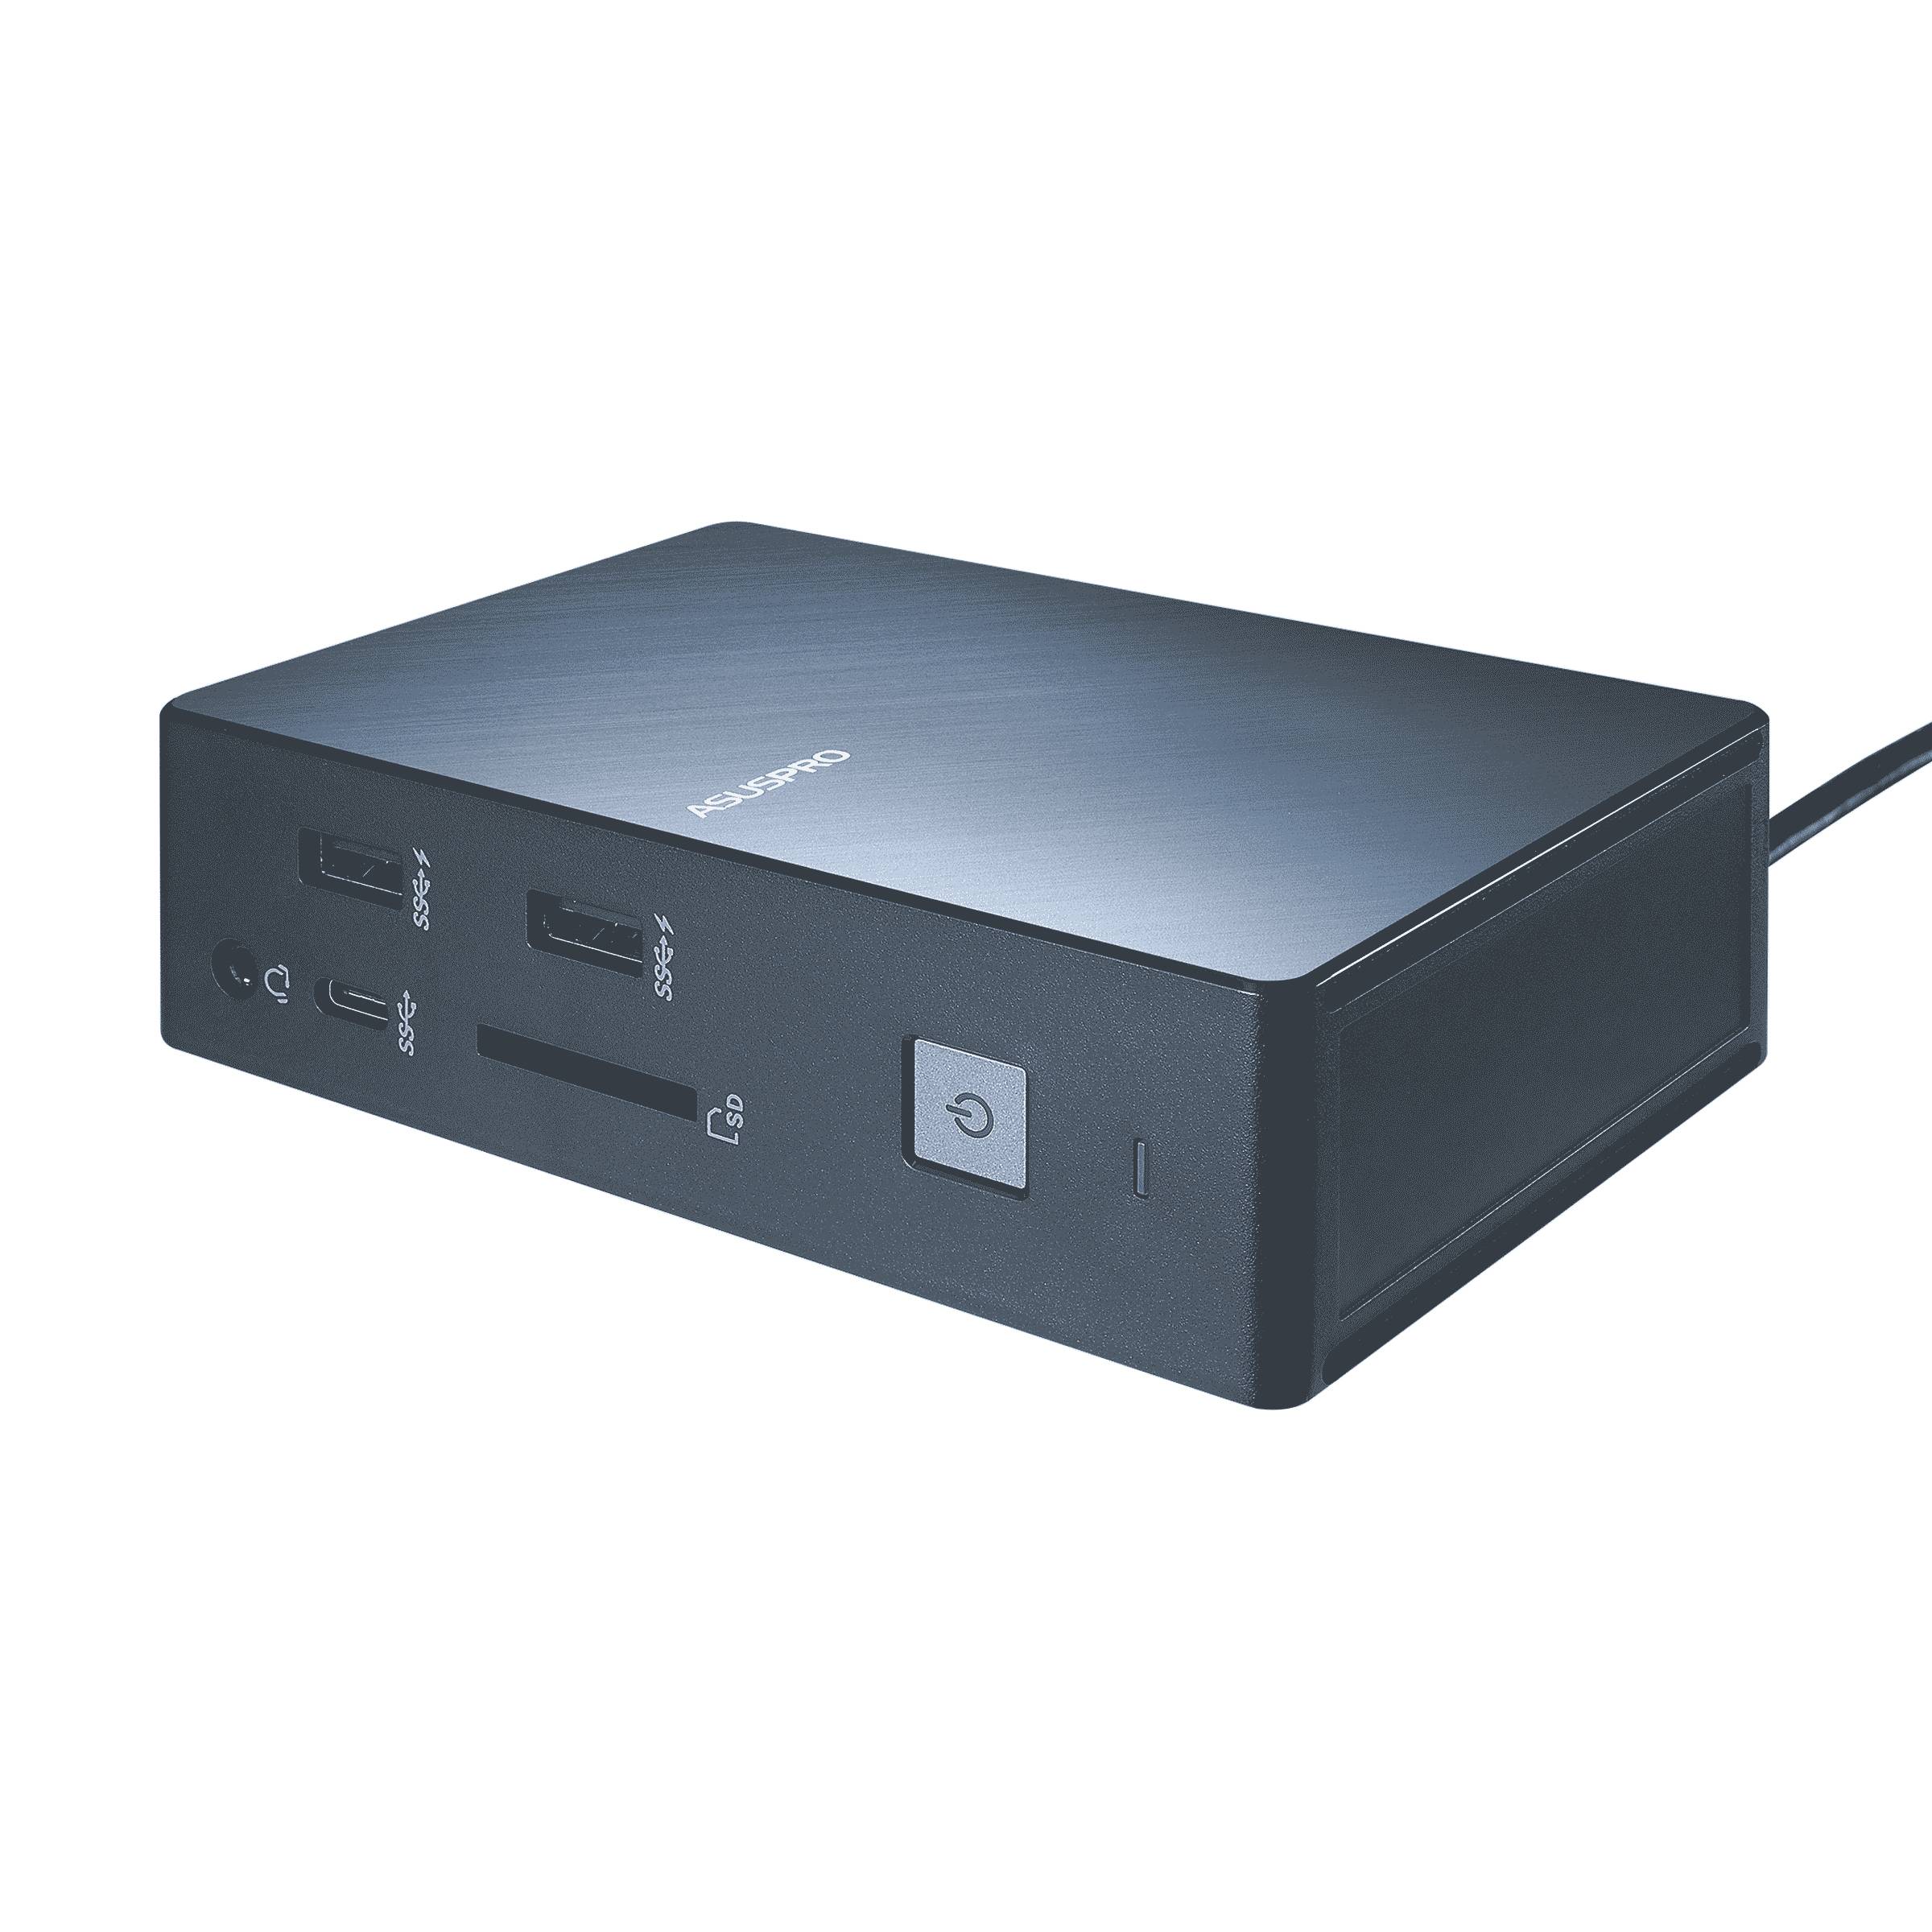 Rca Informatique - image du produit : SIMPRO DOCK 2 THUNDERBOLT USB TYPE-C DOCKING STATION DP HDMI